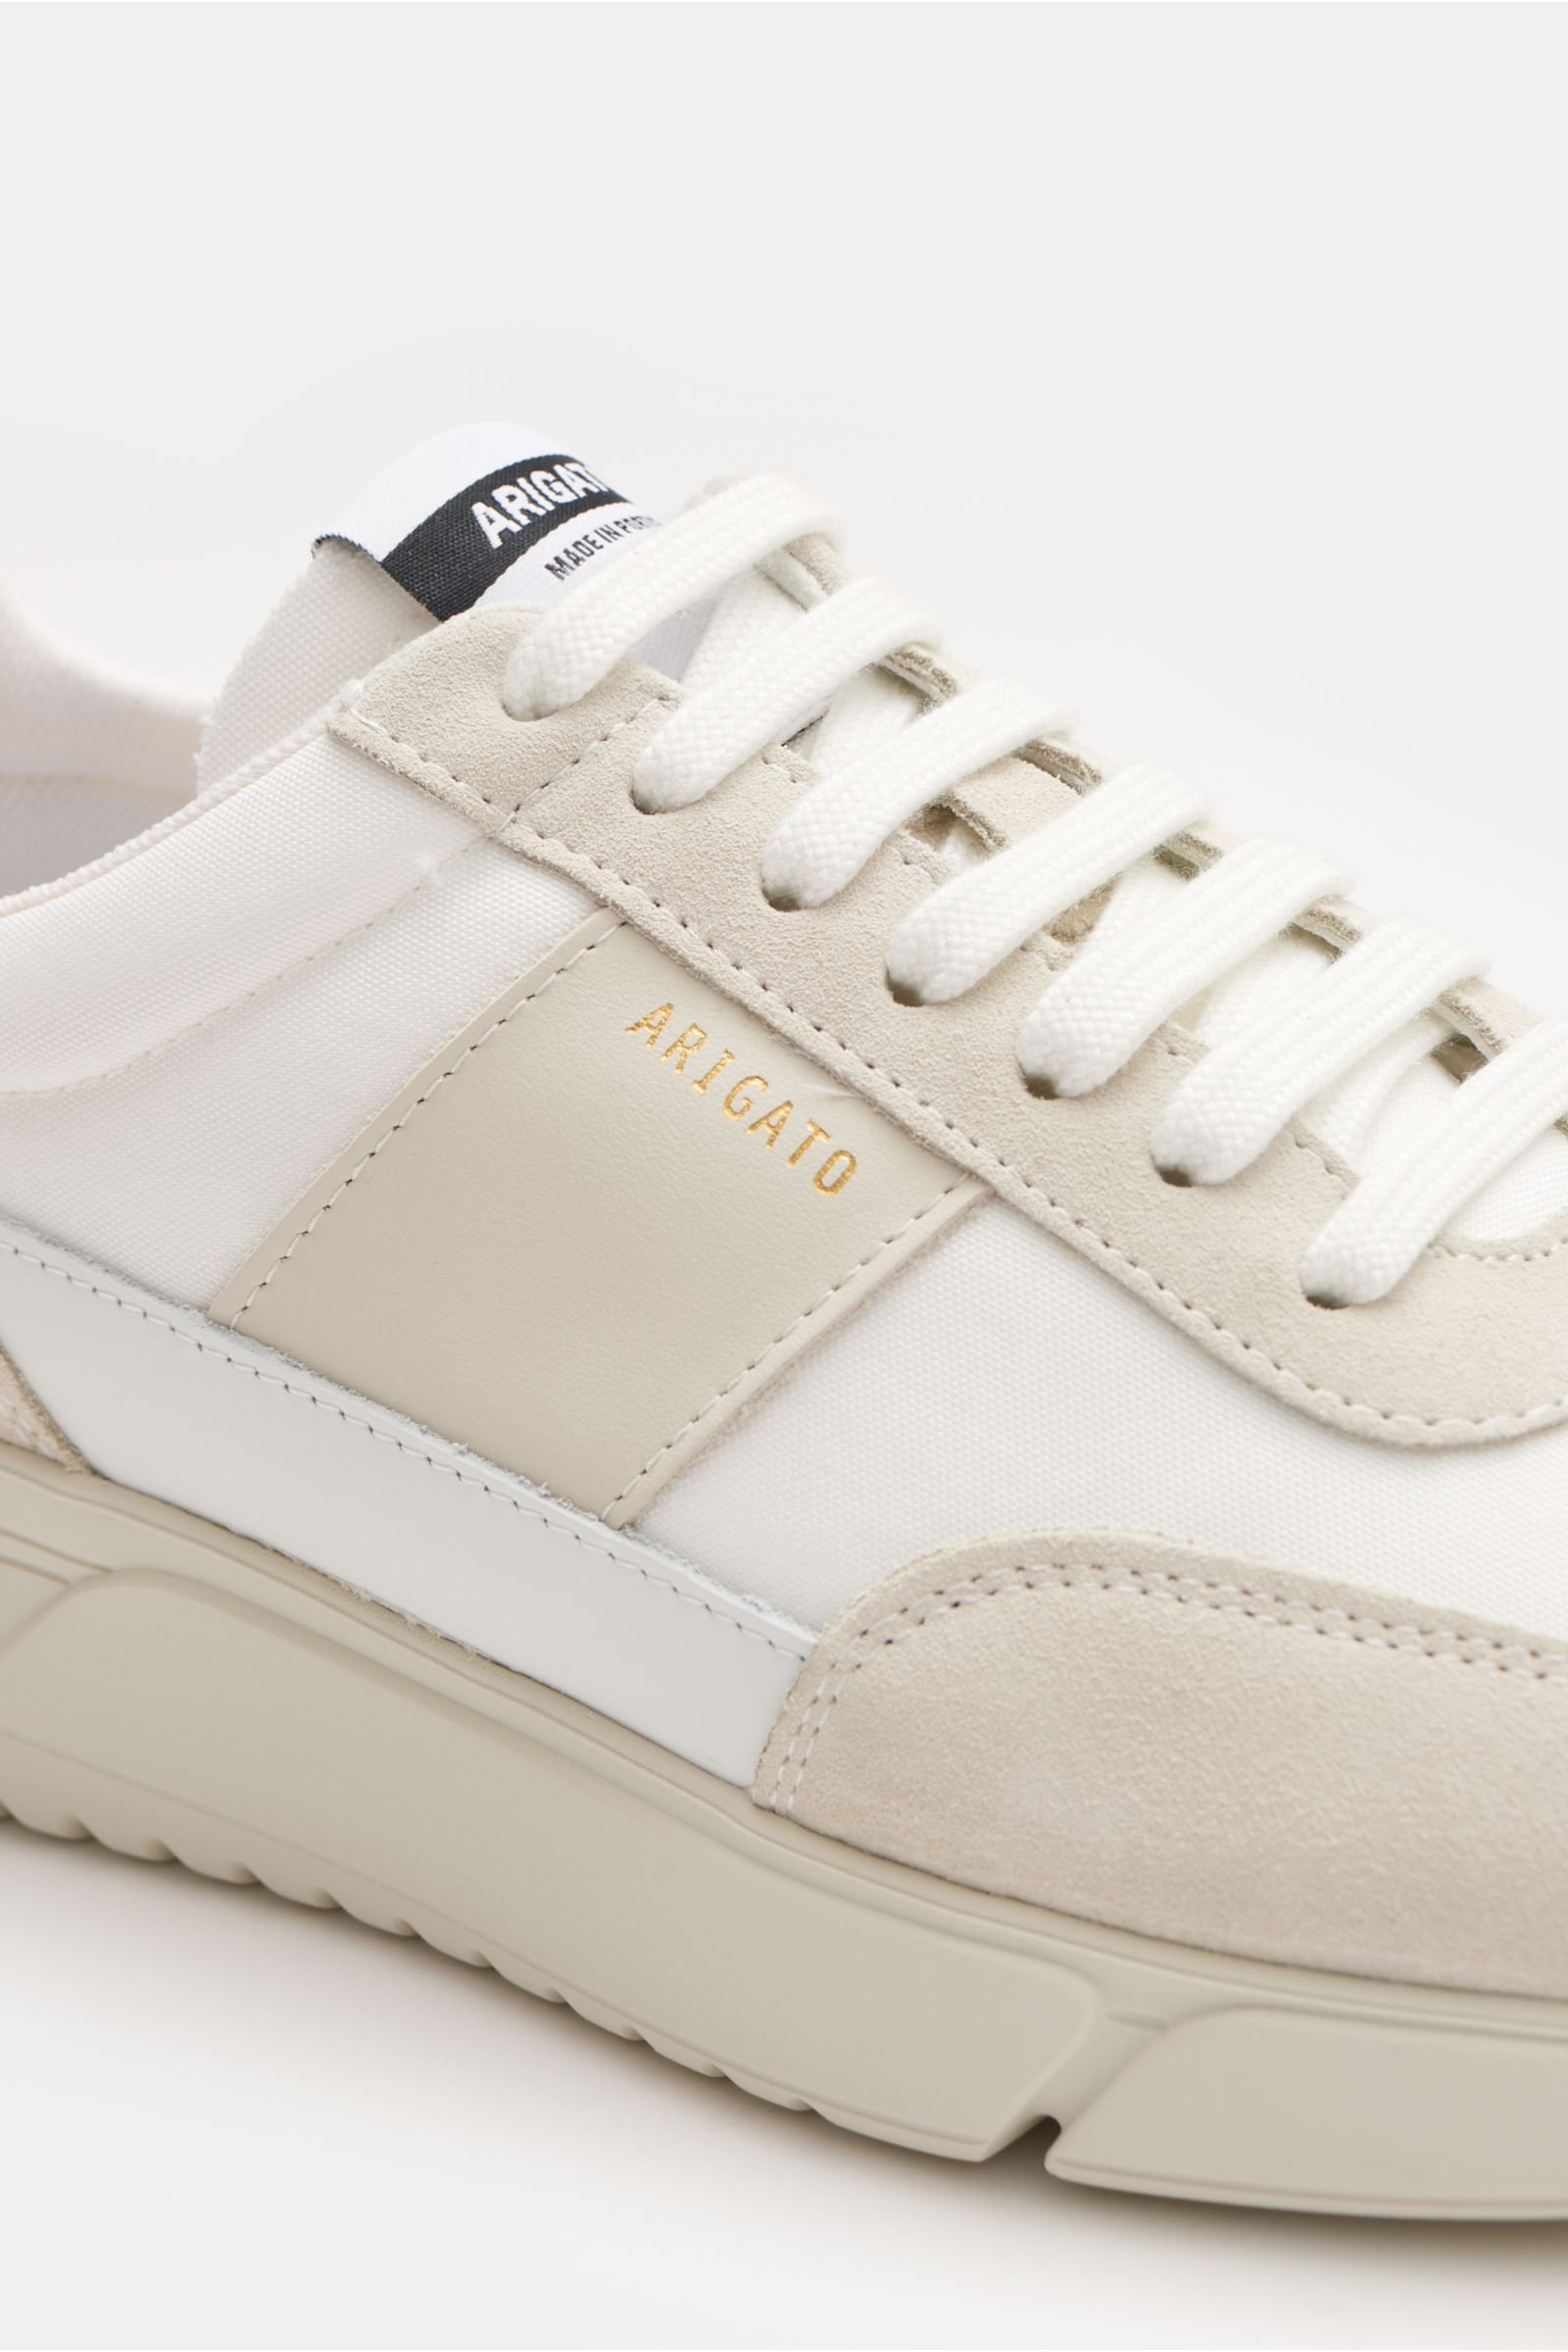 AXEL ARIGATO sneakers 'Genesis Vintage Runner' white/light grey | BRAUN ...